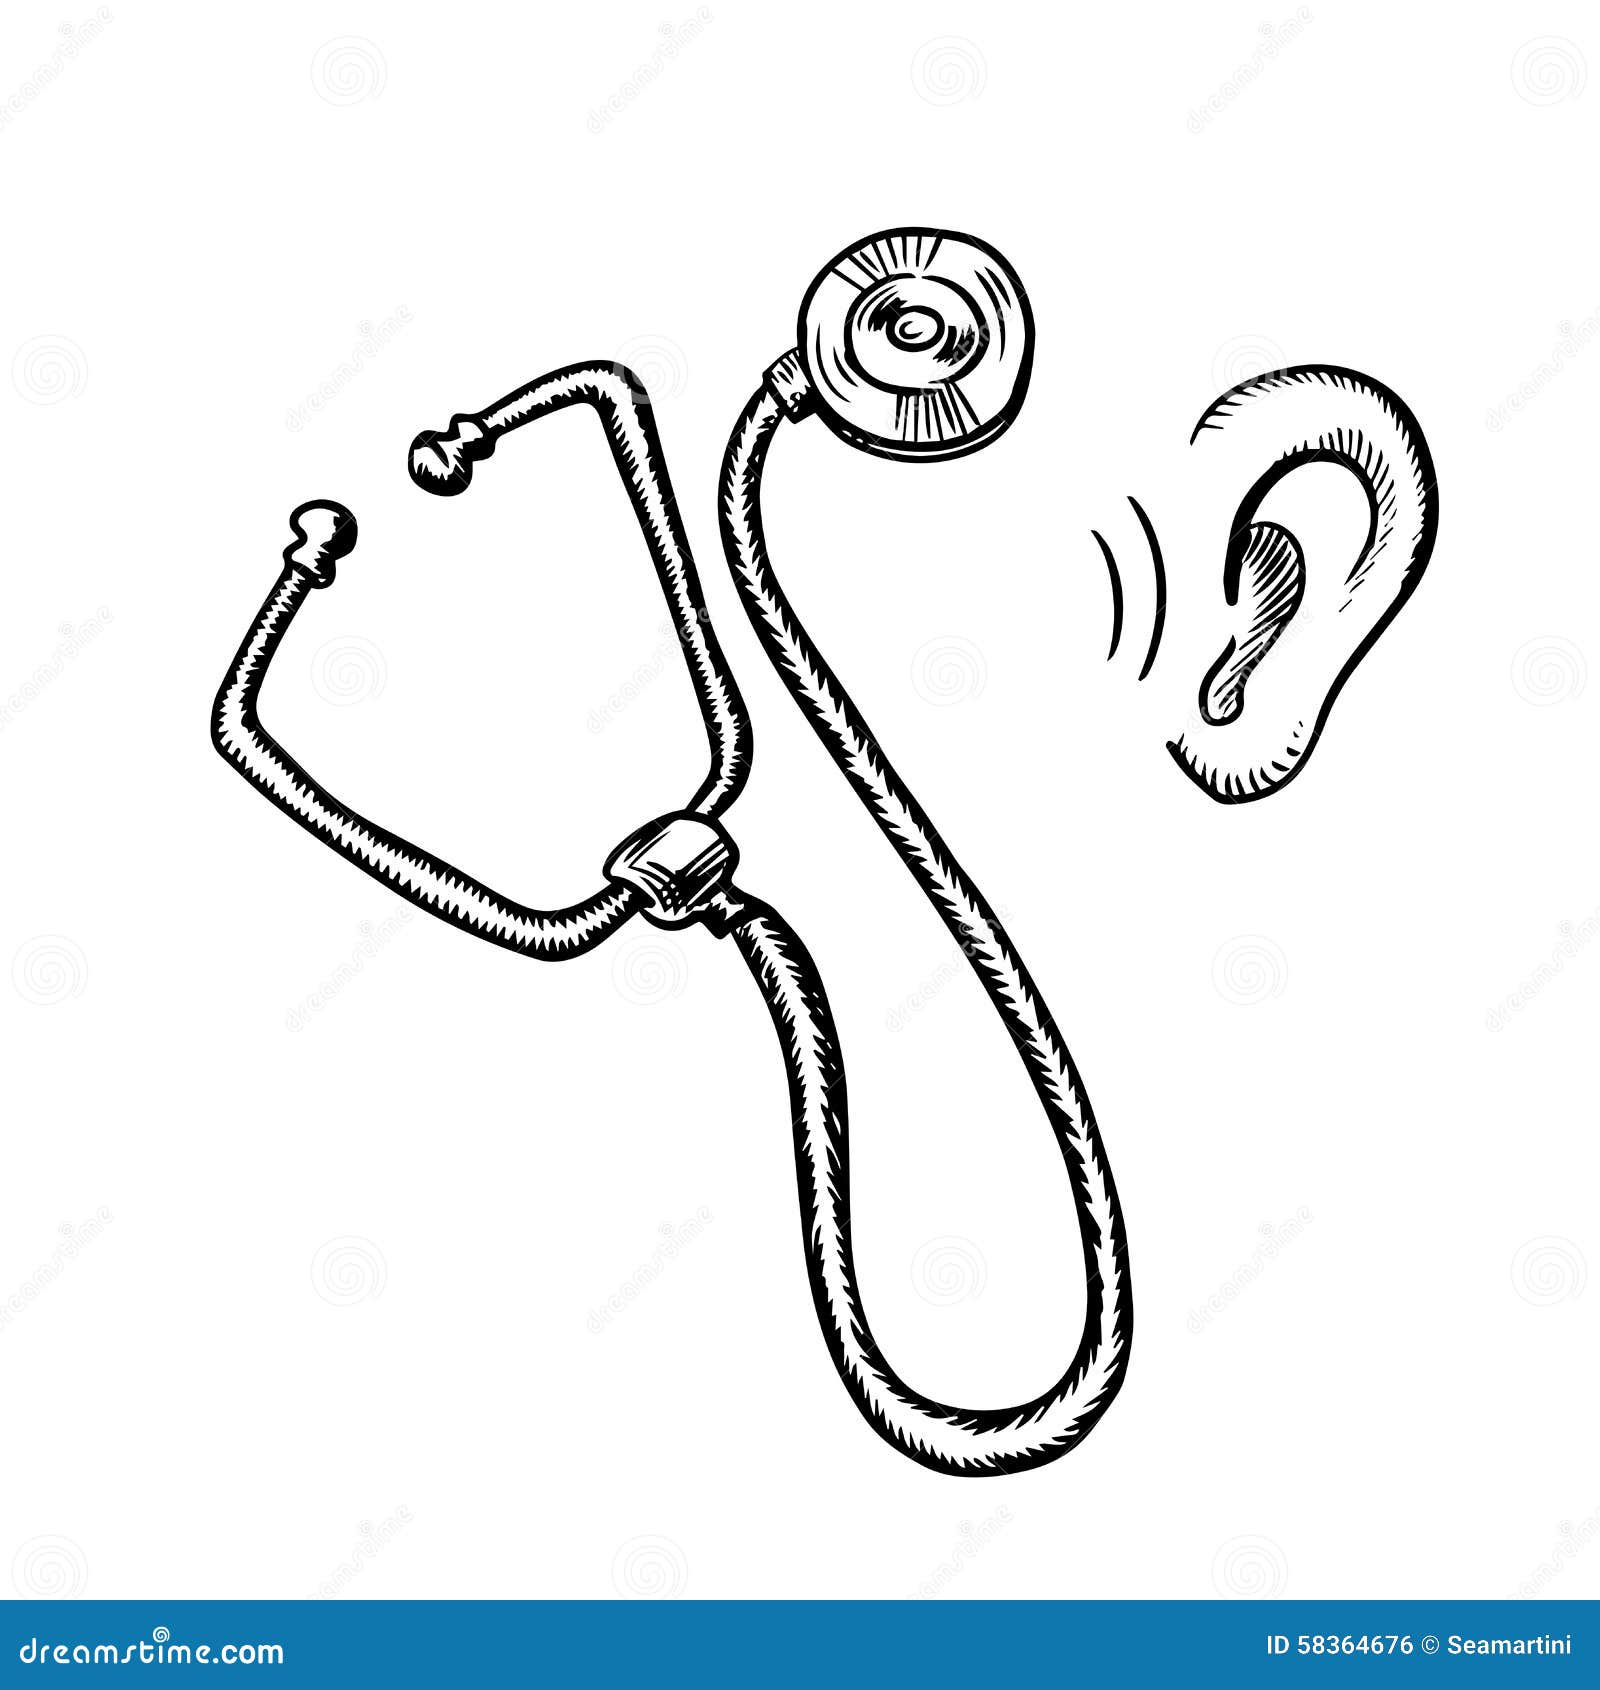 https://thumbs.dreamstime.com/z/medical-stethoscope-human-ear-sketch-isolated-white-background-healthcare-medicine-design-58364676.jpg